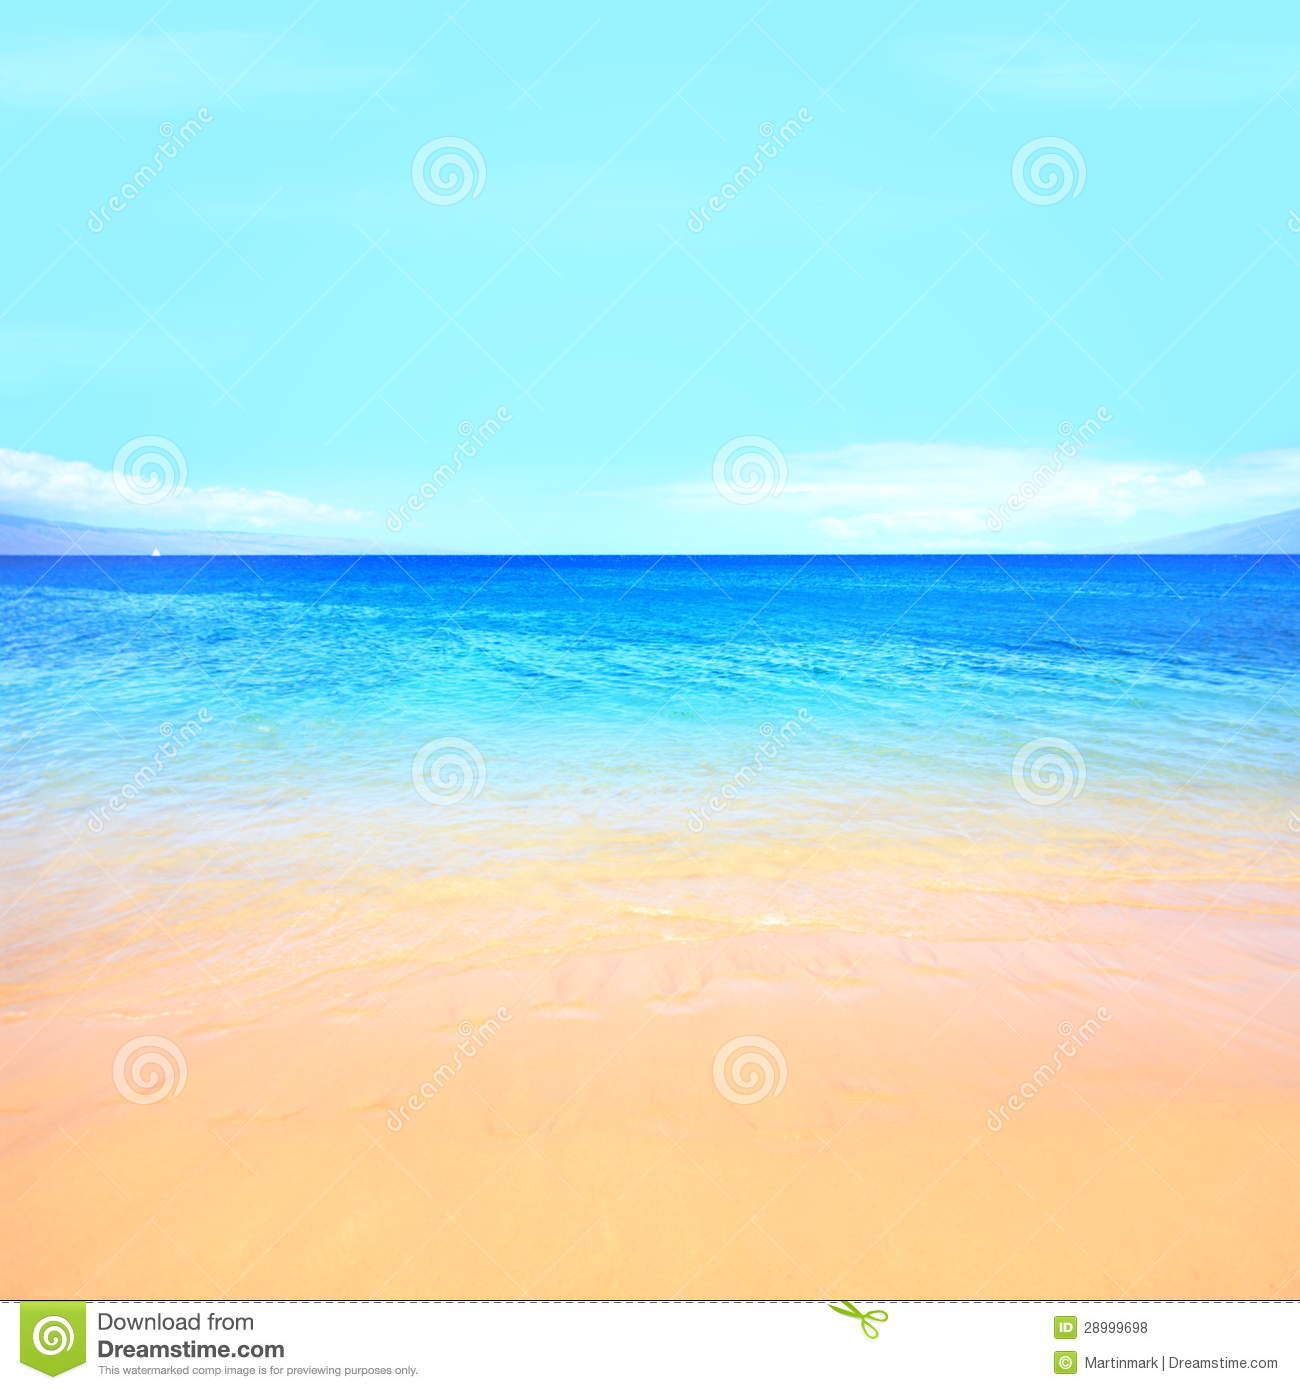 Beach Ocean Background Texture  Blue Water Sky Sand And Beach